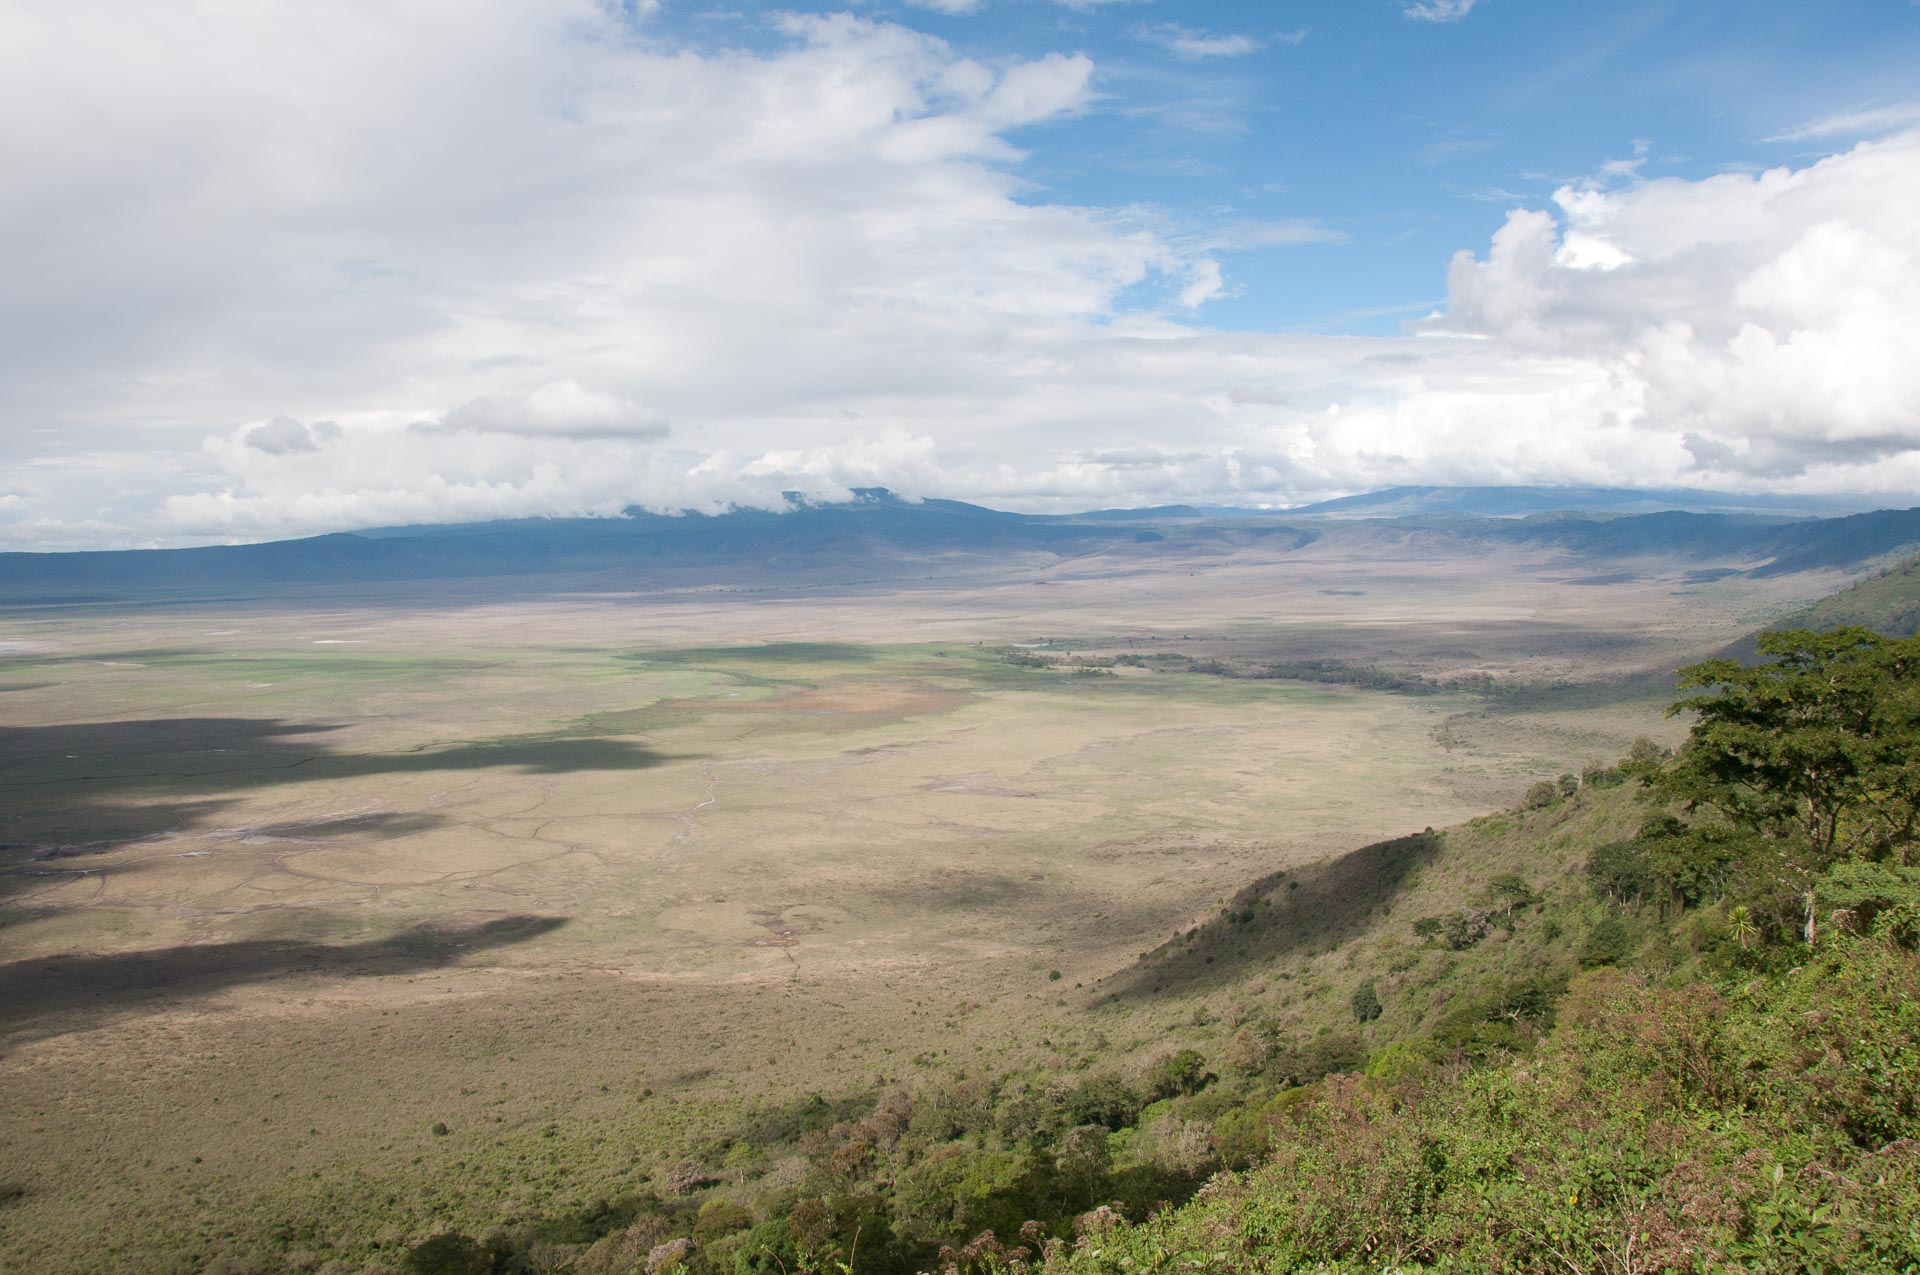 Ngorongoro Conservation in Tansania